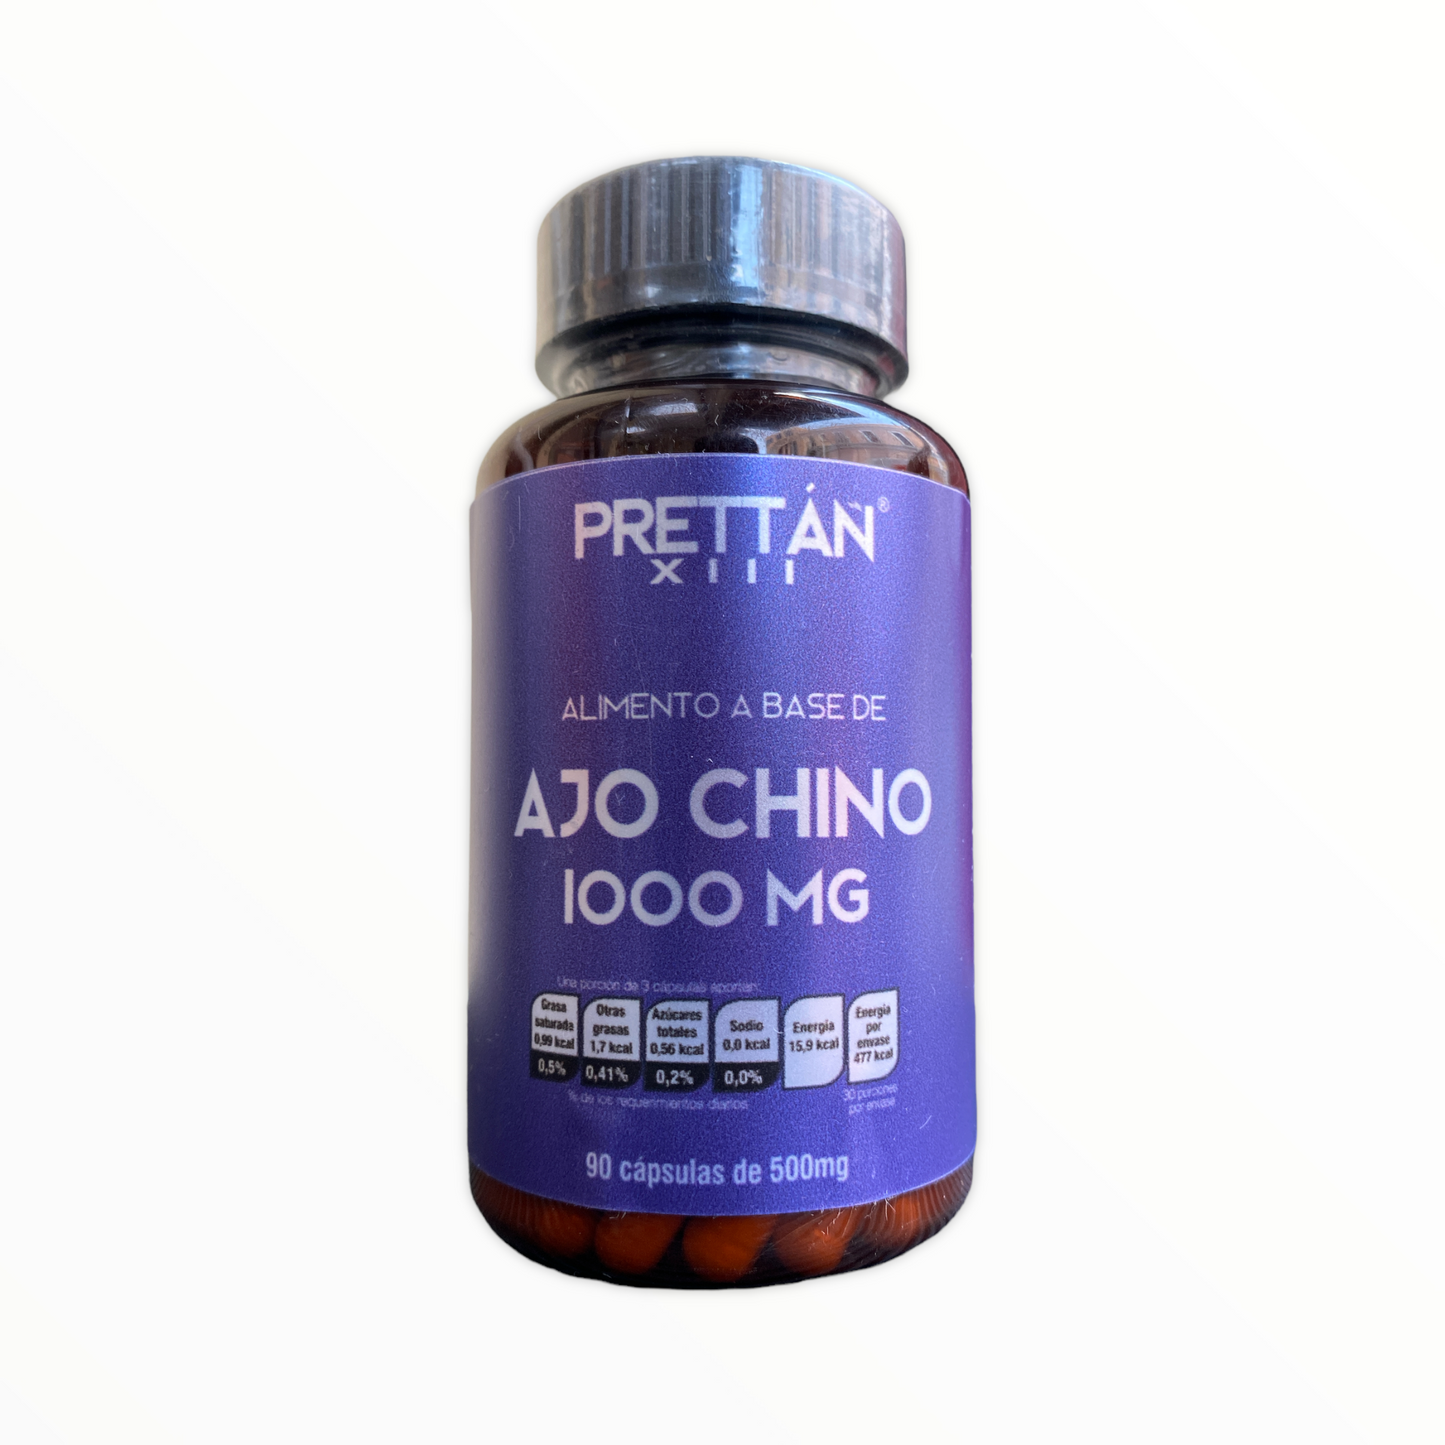 Ajo Chino Prettan 1000 mg (90 cápsulas)